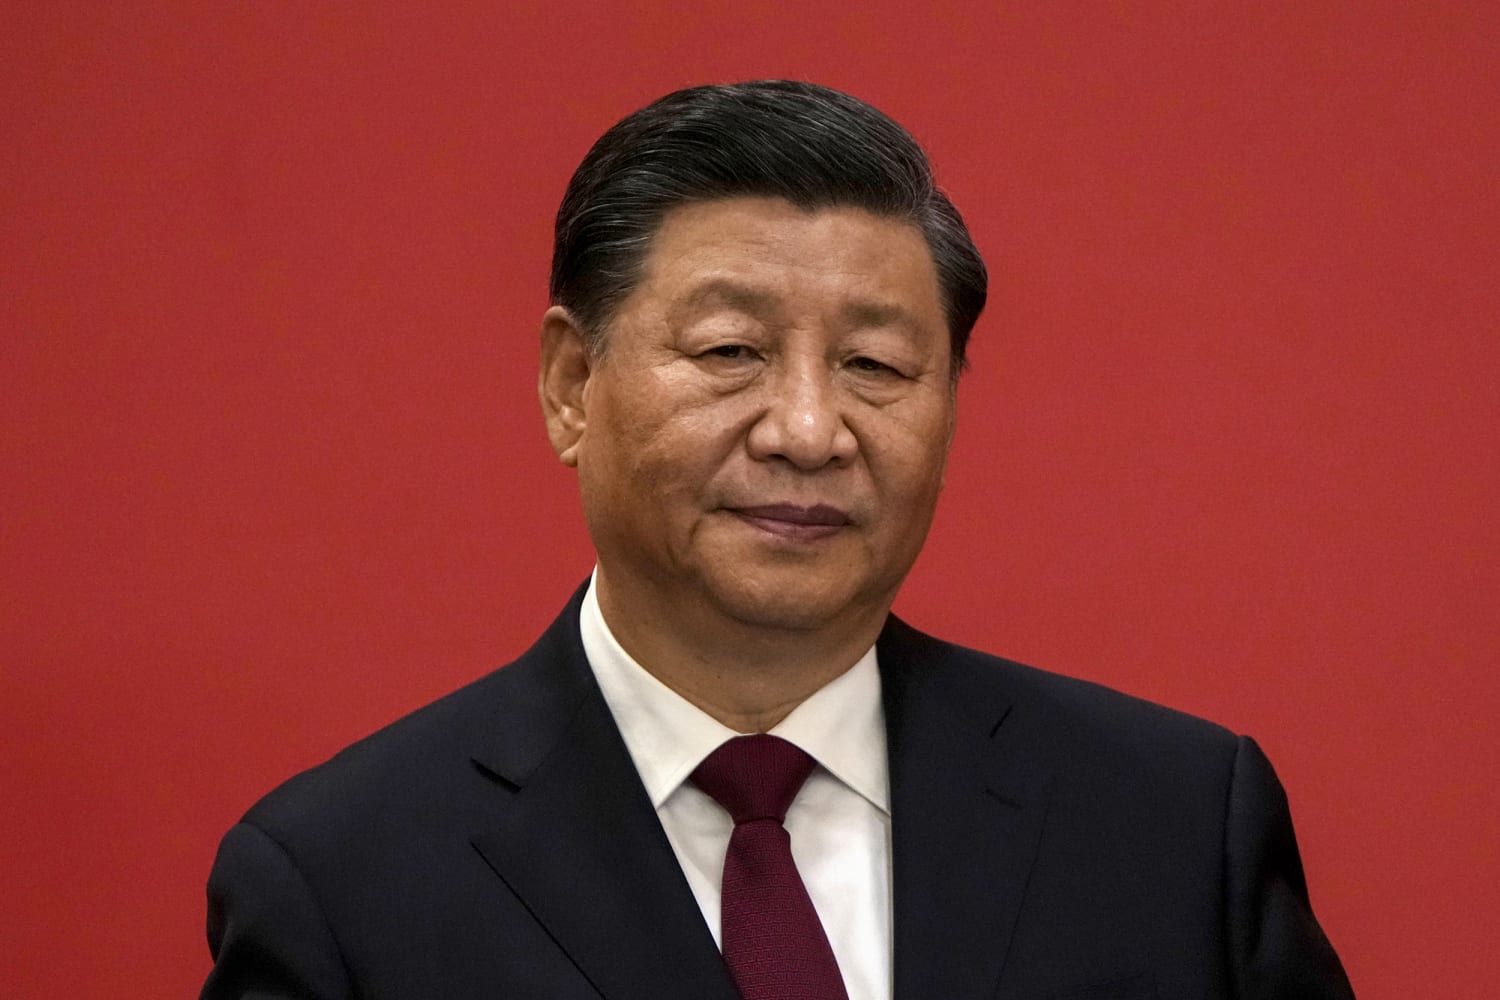 Xi Jinping busca cambiar "amargura" por empleo juvenil